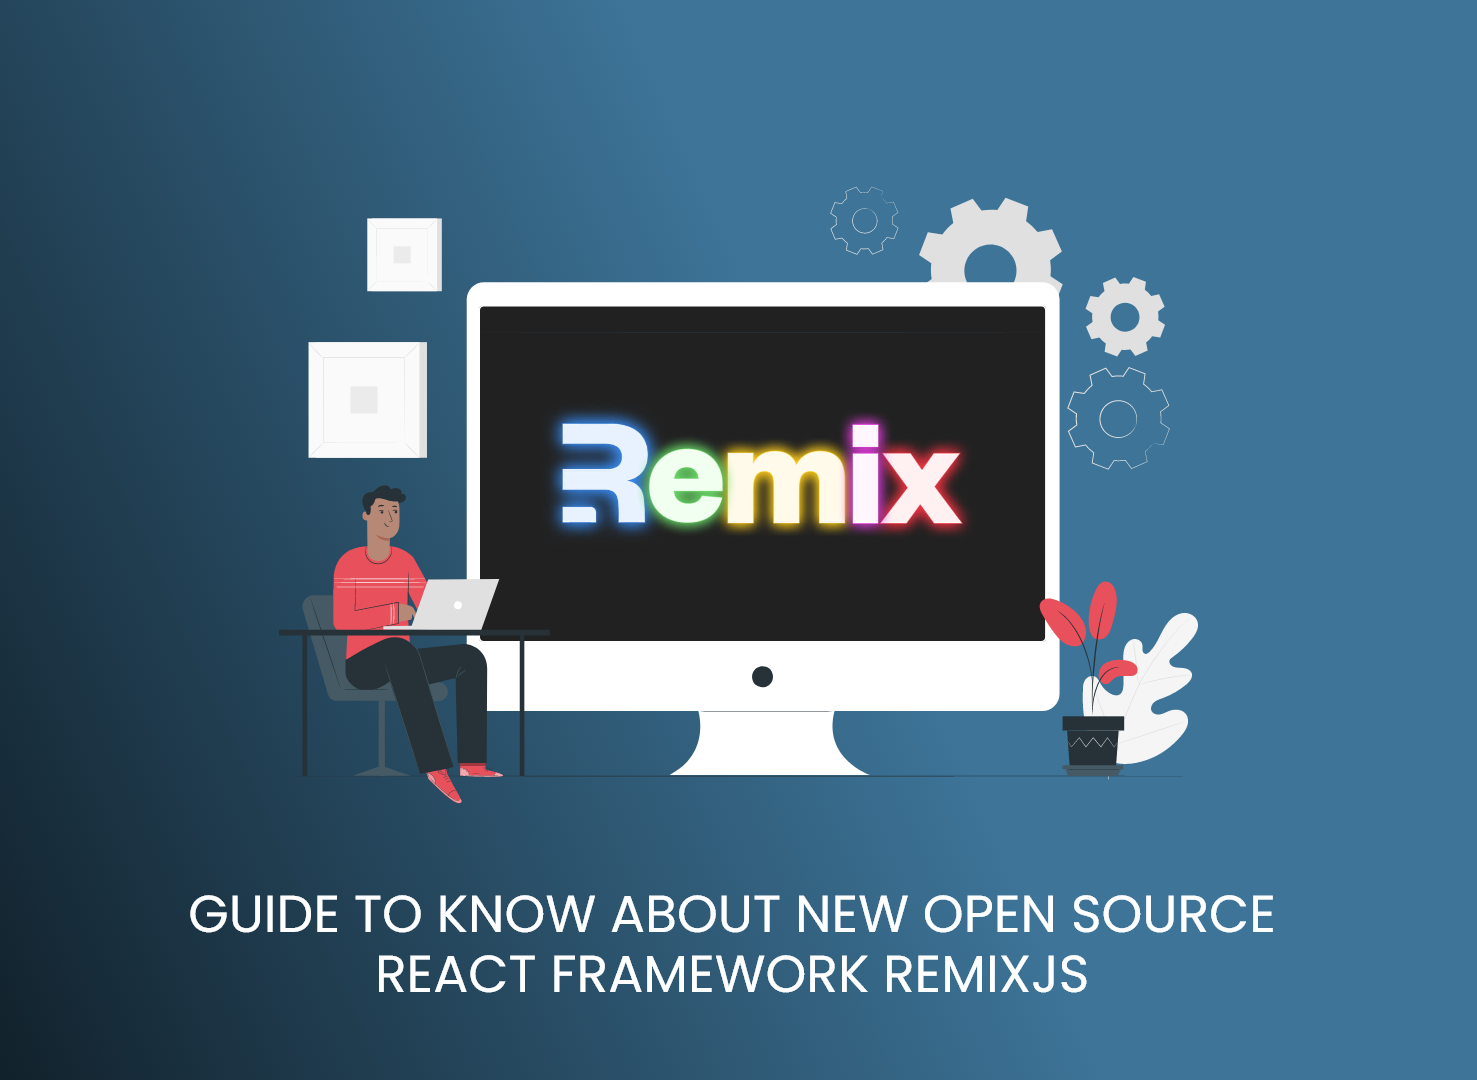 React framework RemixJs
